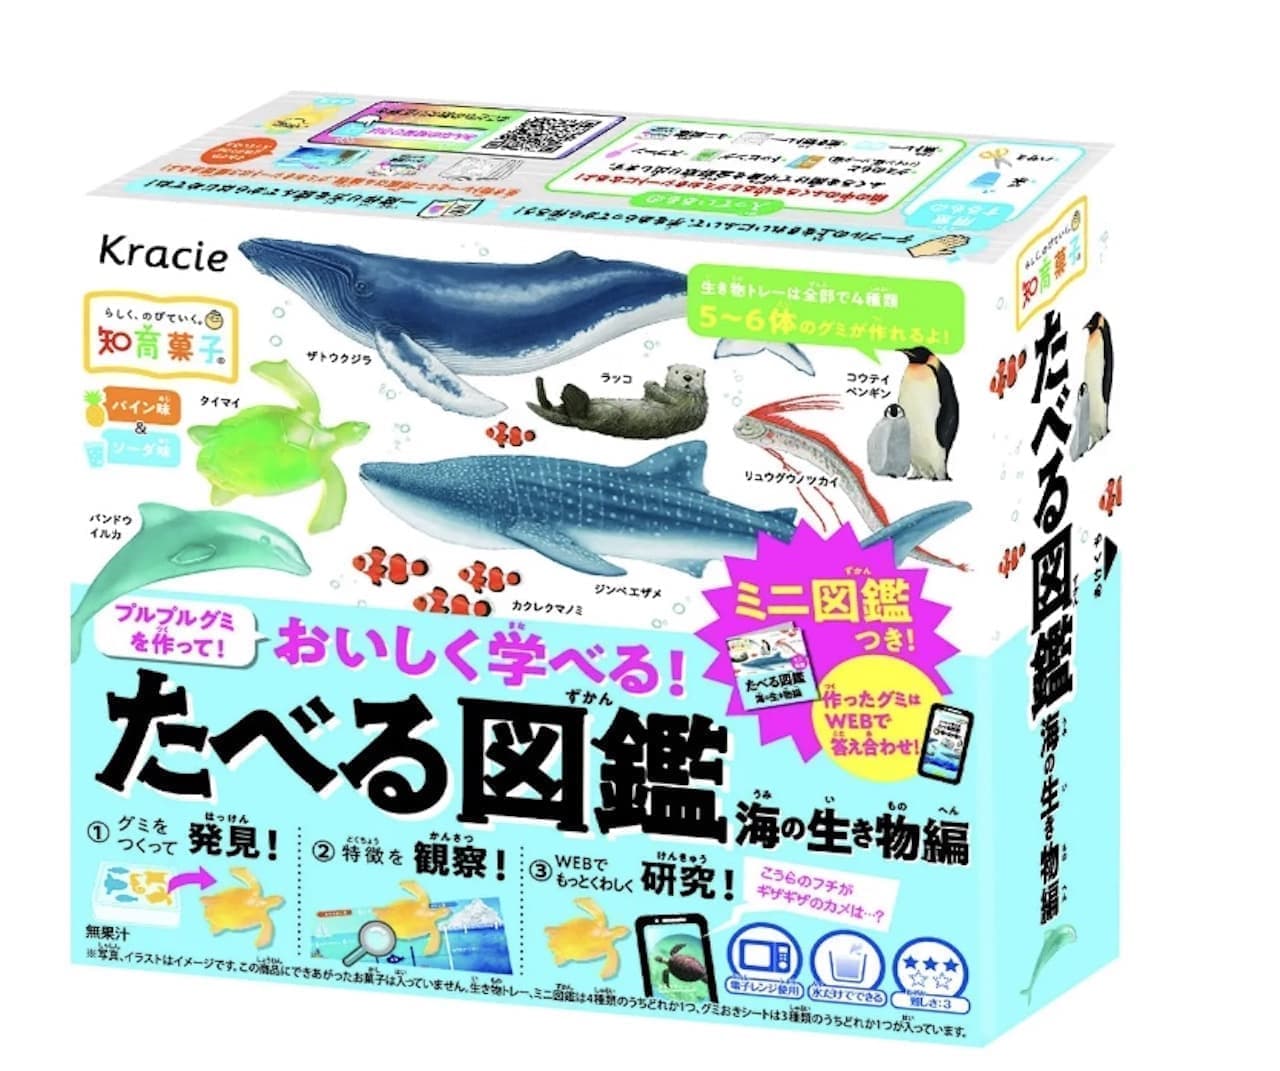 Kracie Foods "TABERU Zukan: Sea Creatures" (Japanese only)